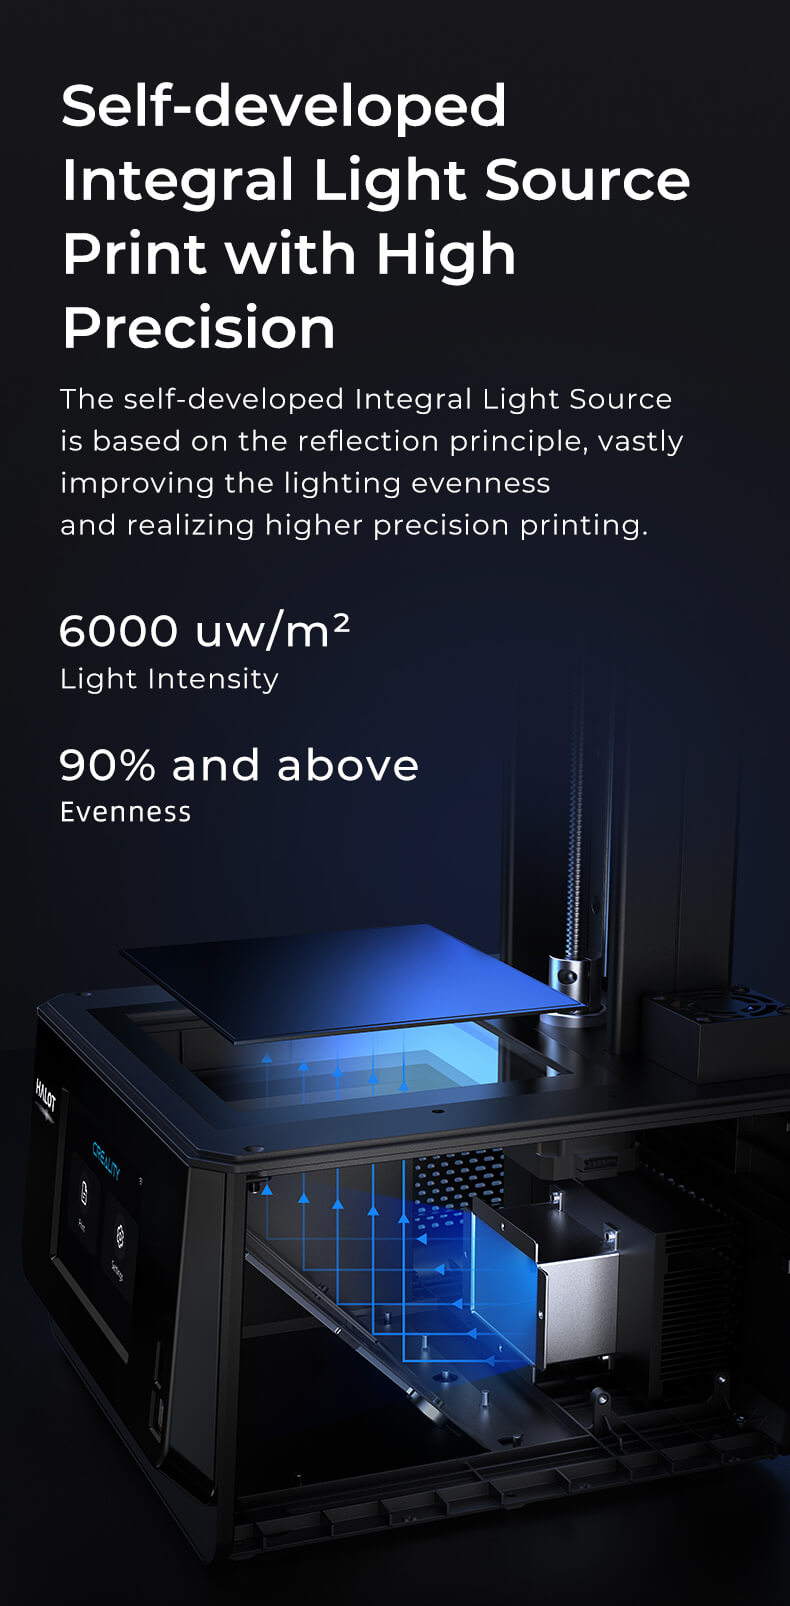 creality halot one pro 3d printer